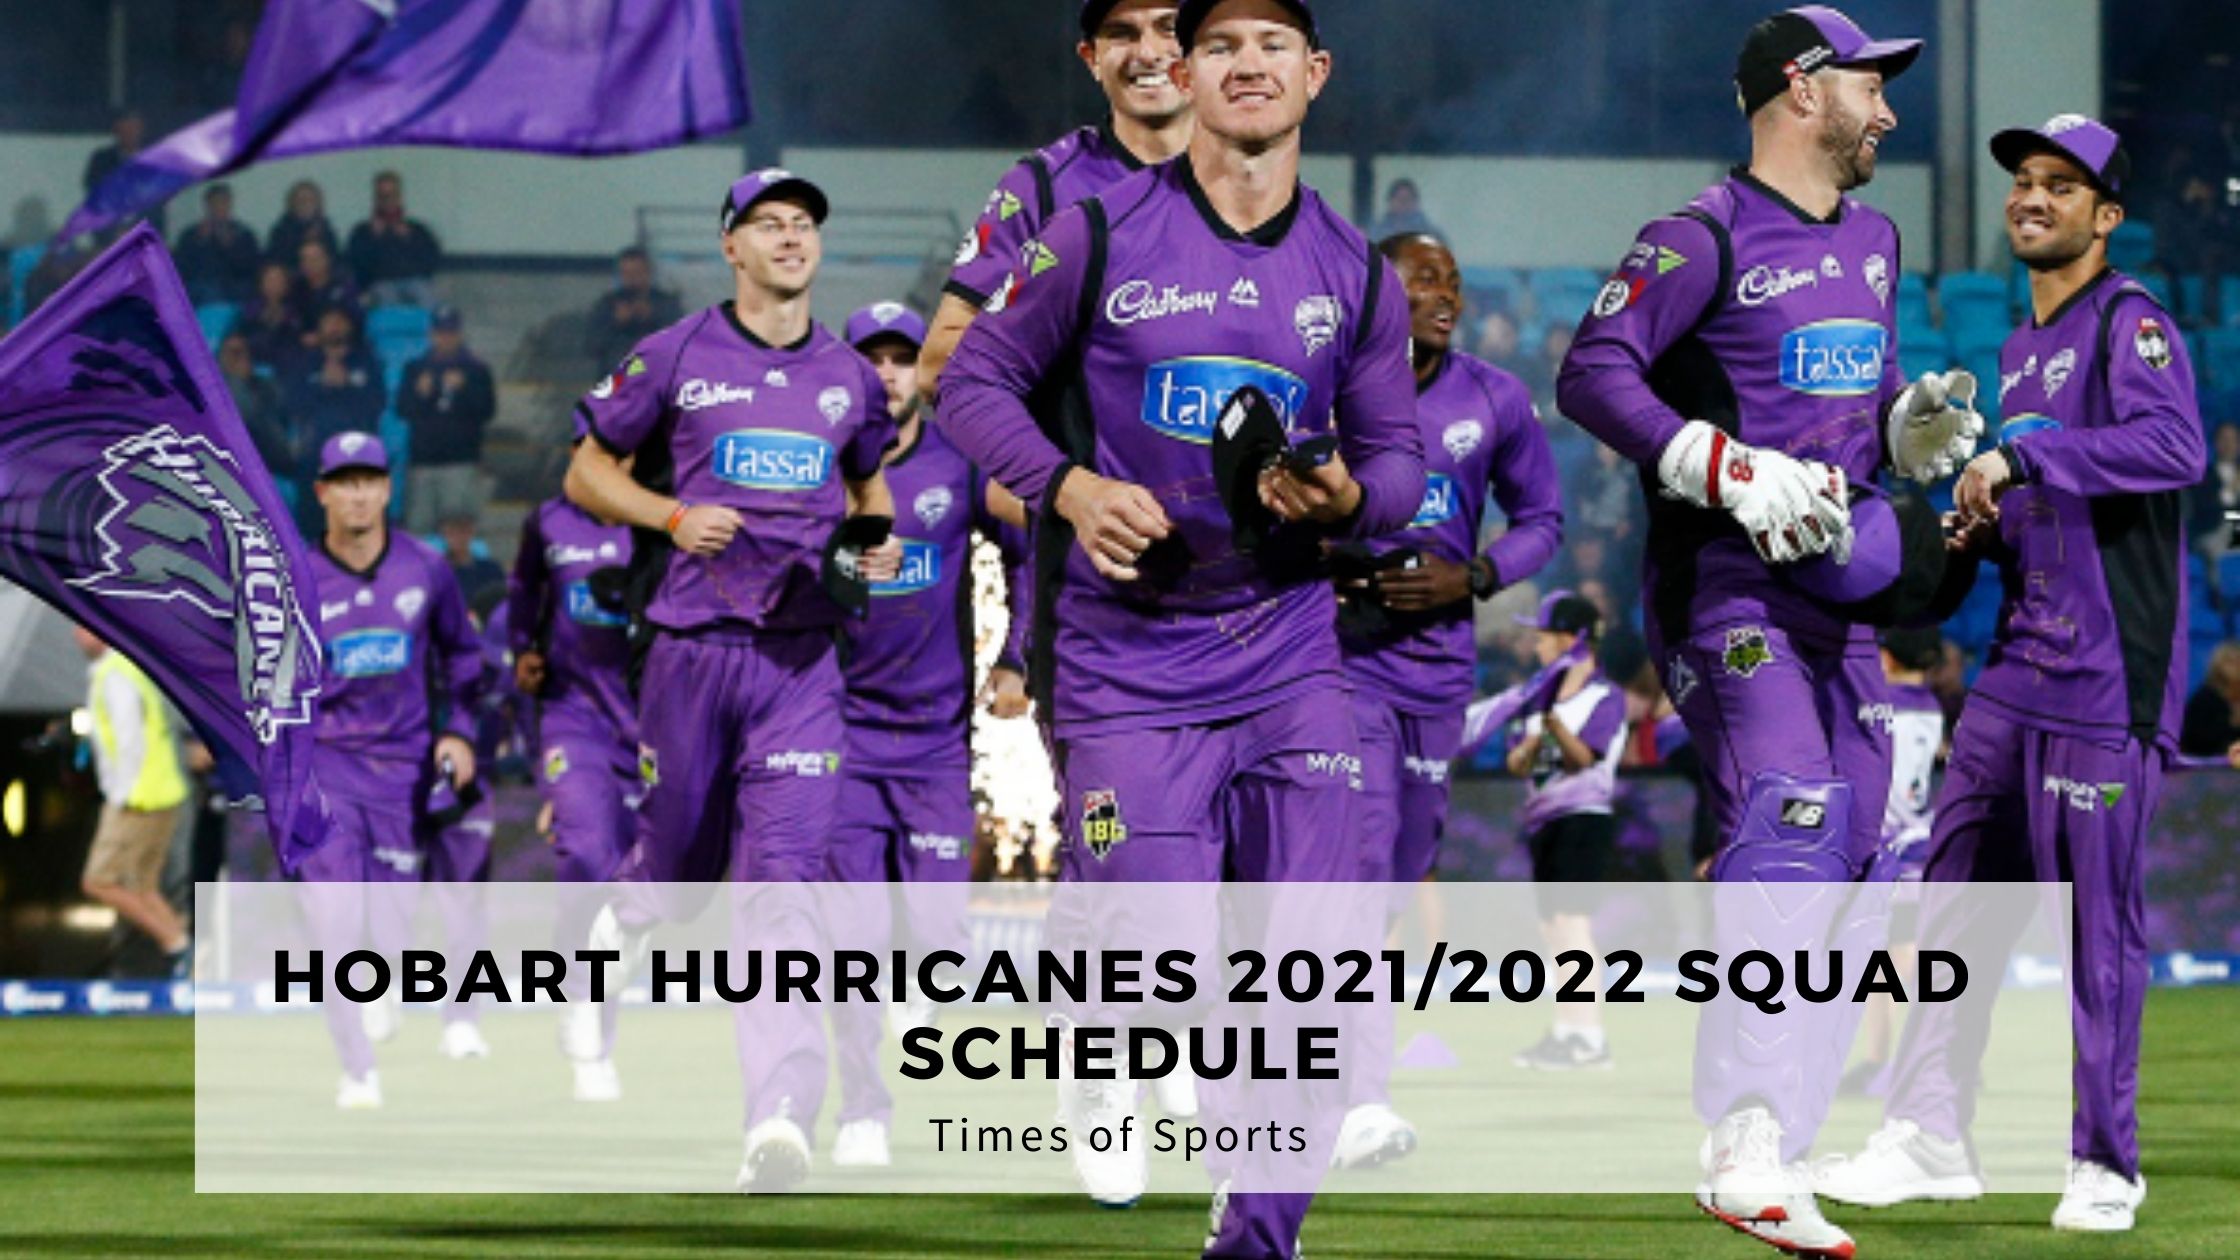 Hurricanes Schedule 2022 Bbl: Hobart Hurricanes 2021/2022 Squad Schedule - Live Updates